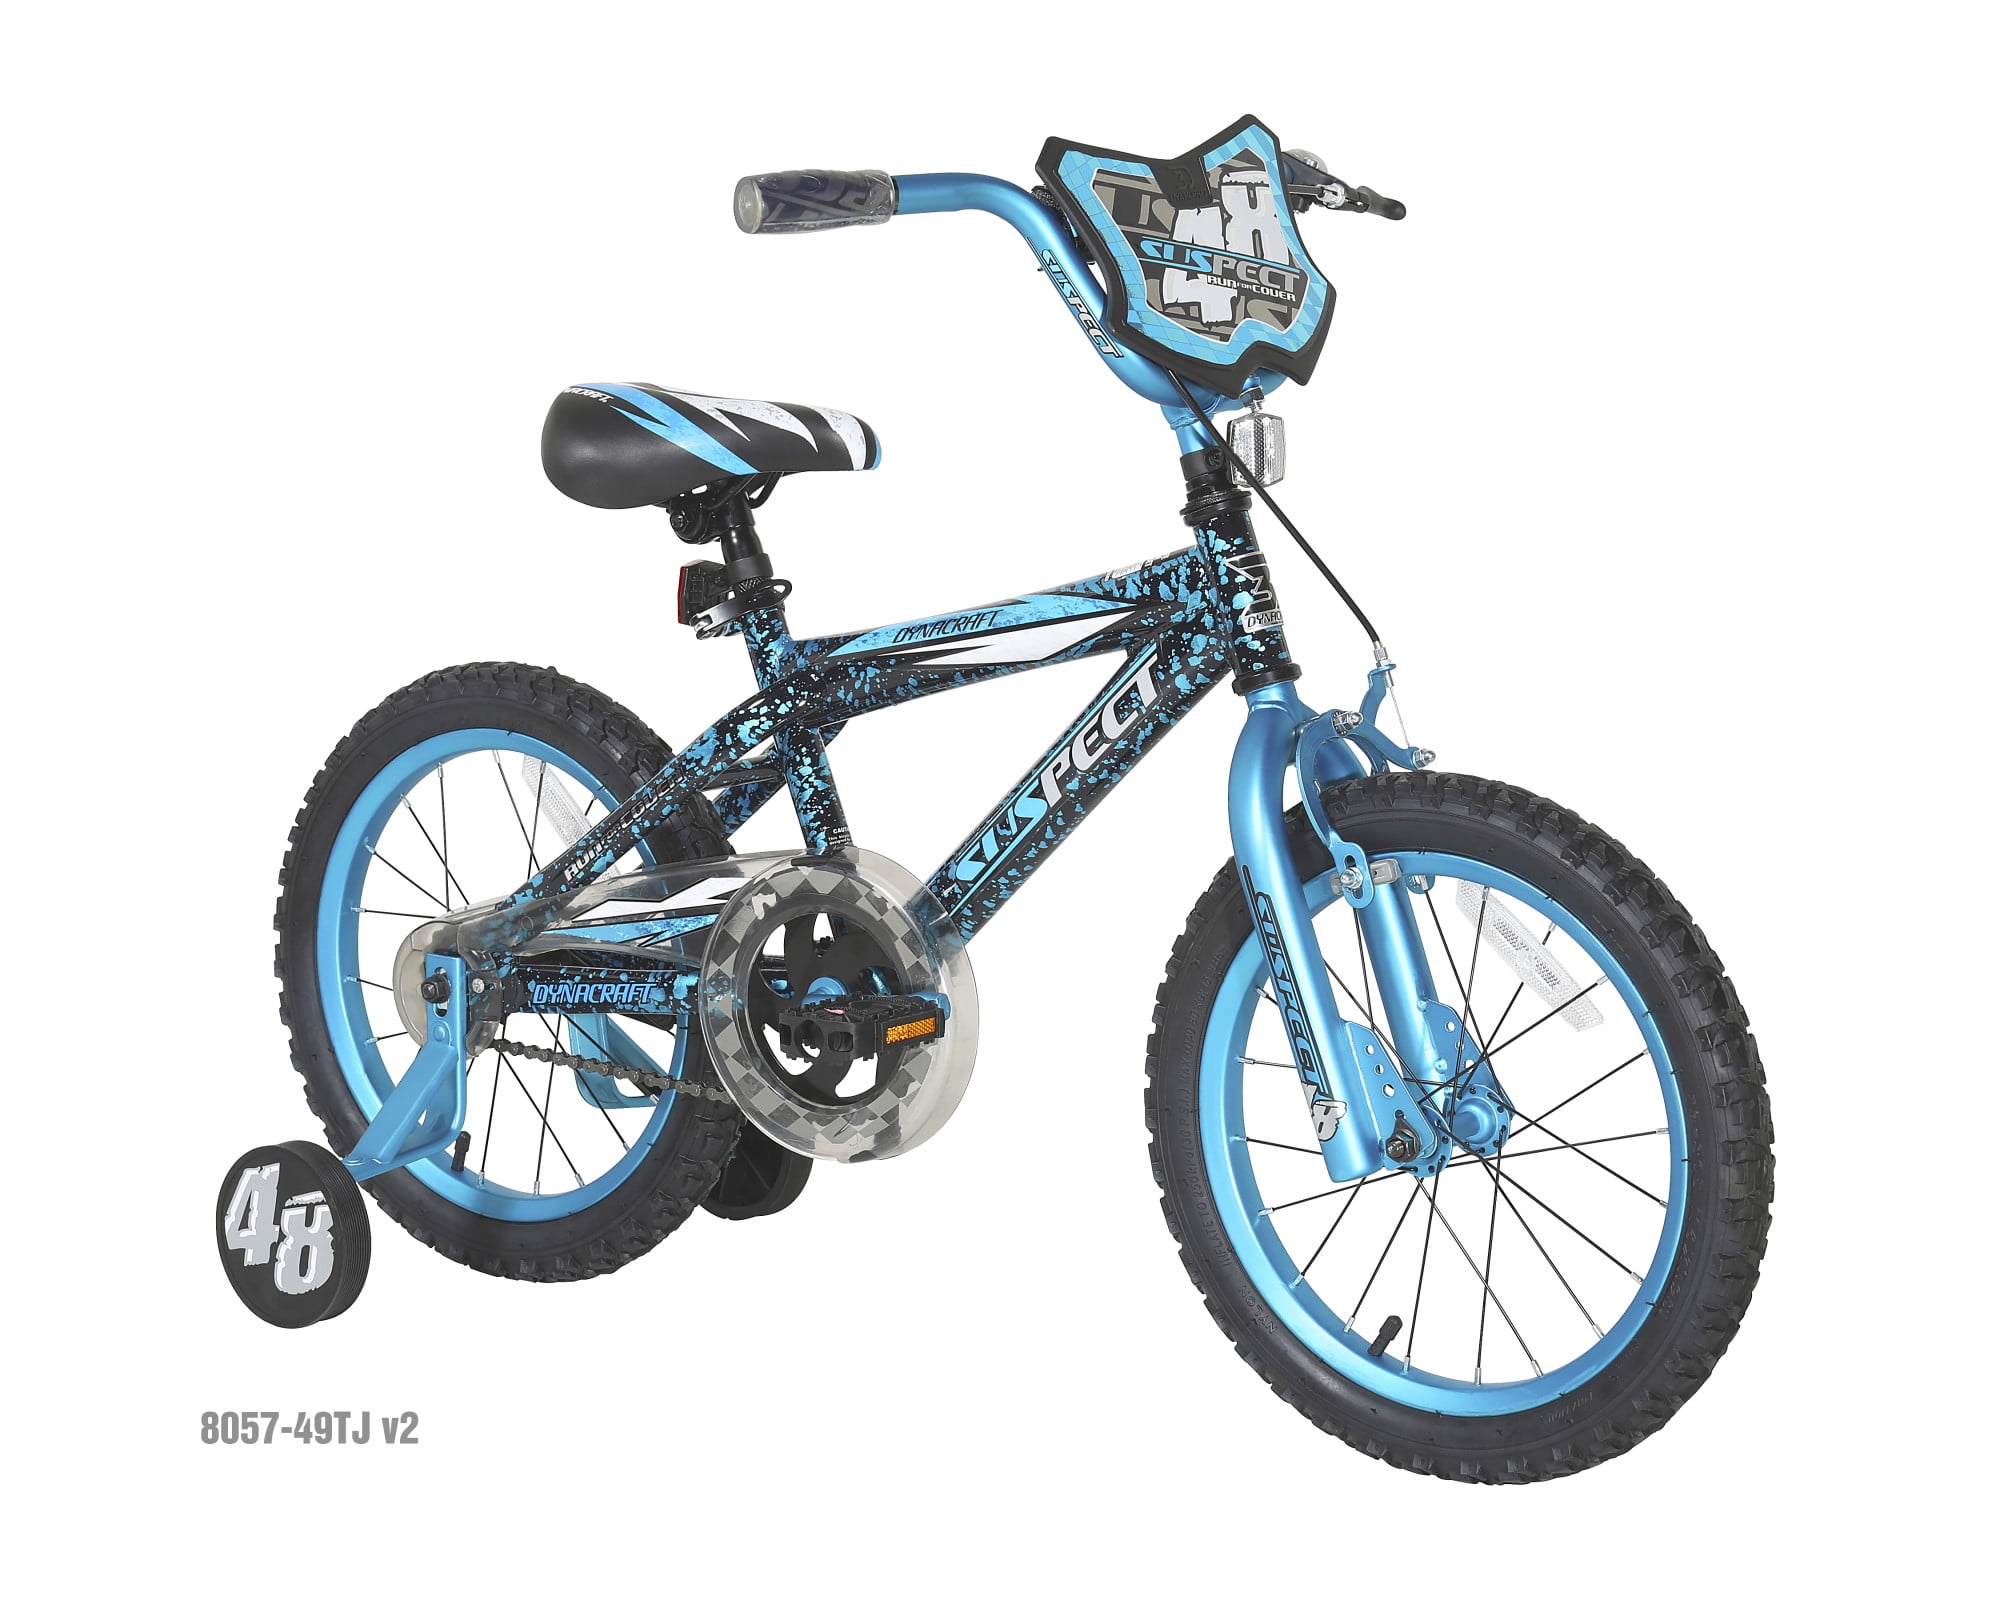 16" Boys BMX Bike Blue Steel Frame Kids Bicycle Motocross Style Training Wheels 